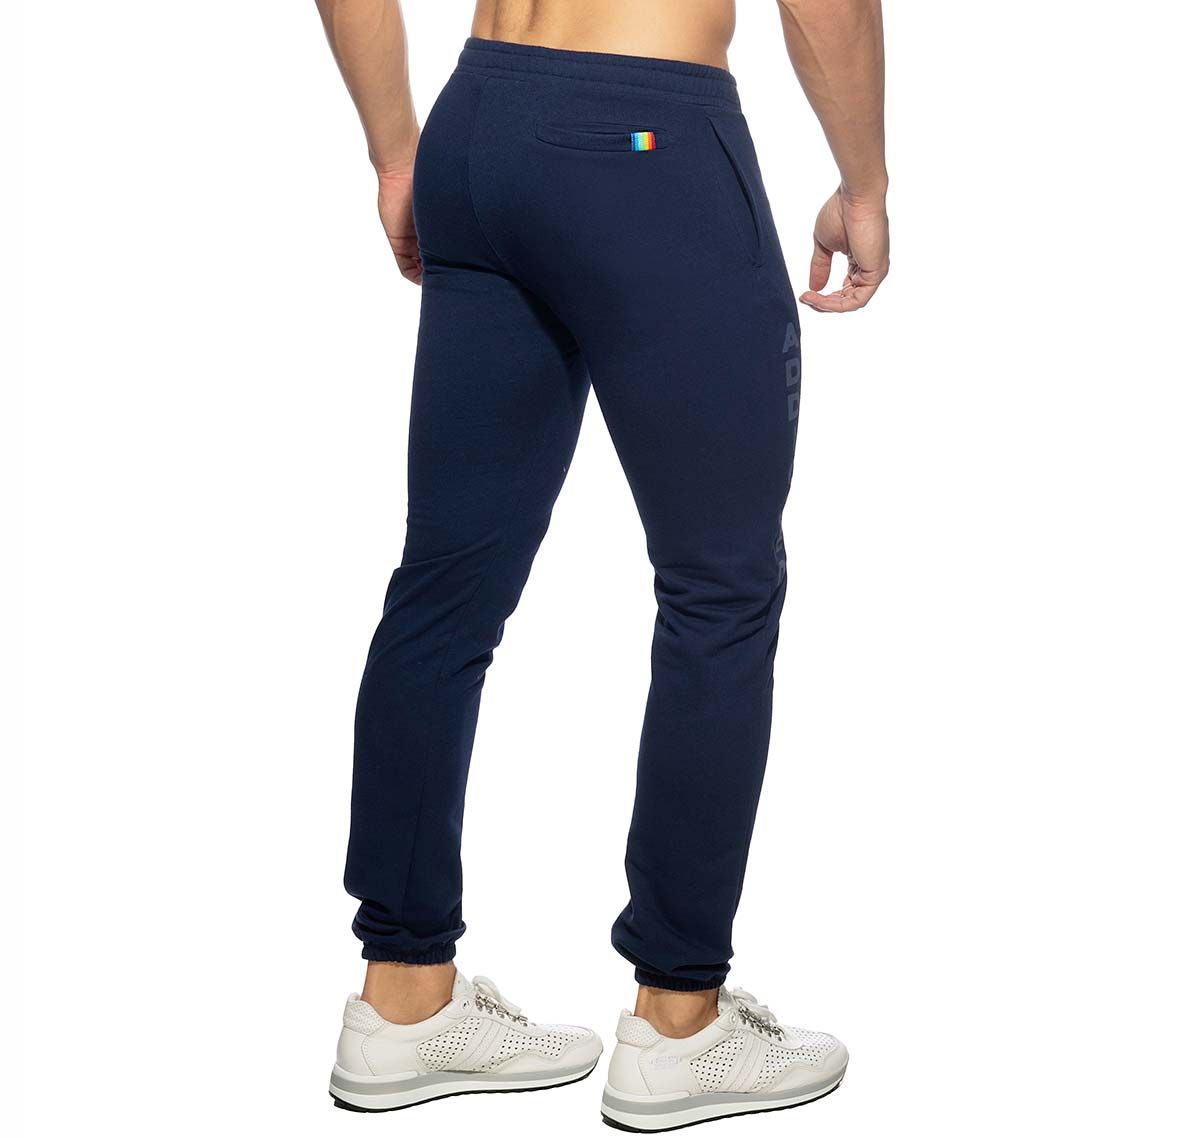 Addicted Pantaloni sportivi lunghi LONG JOGGING PANTS AD999, blu marino